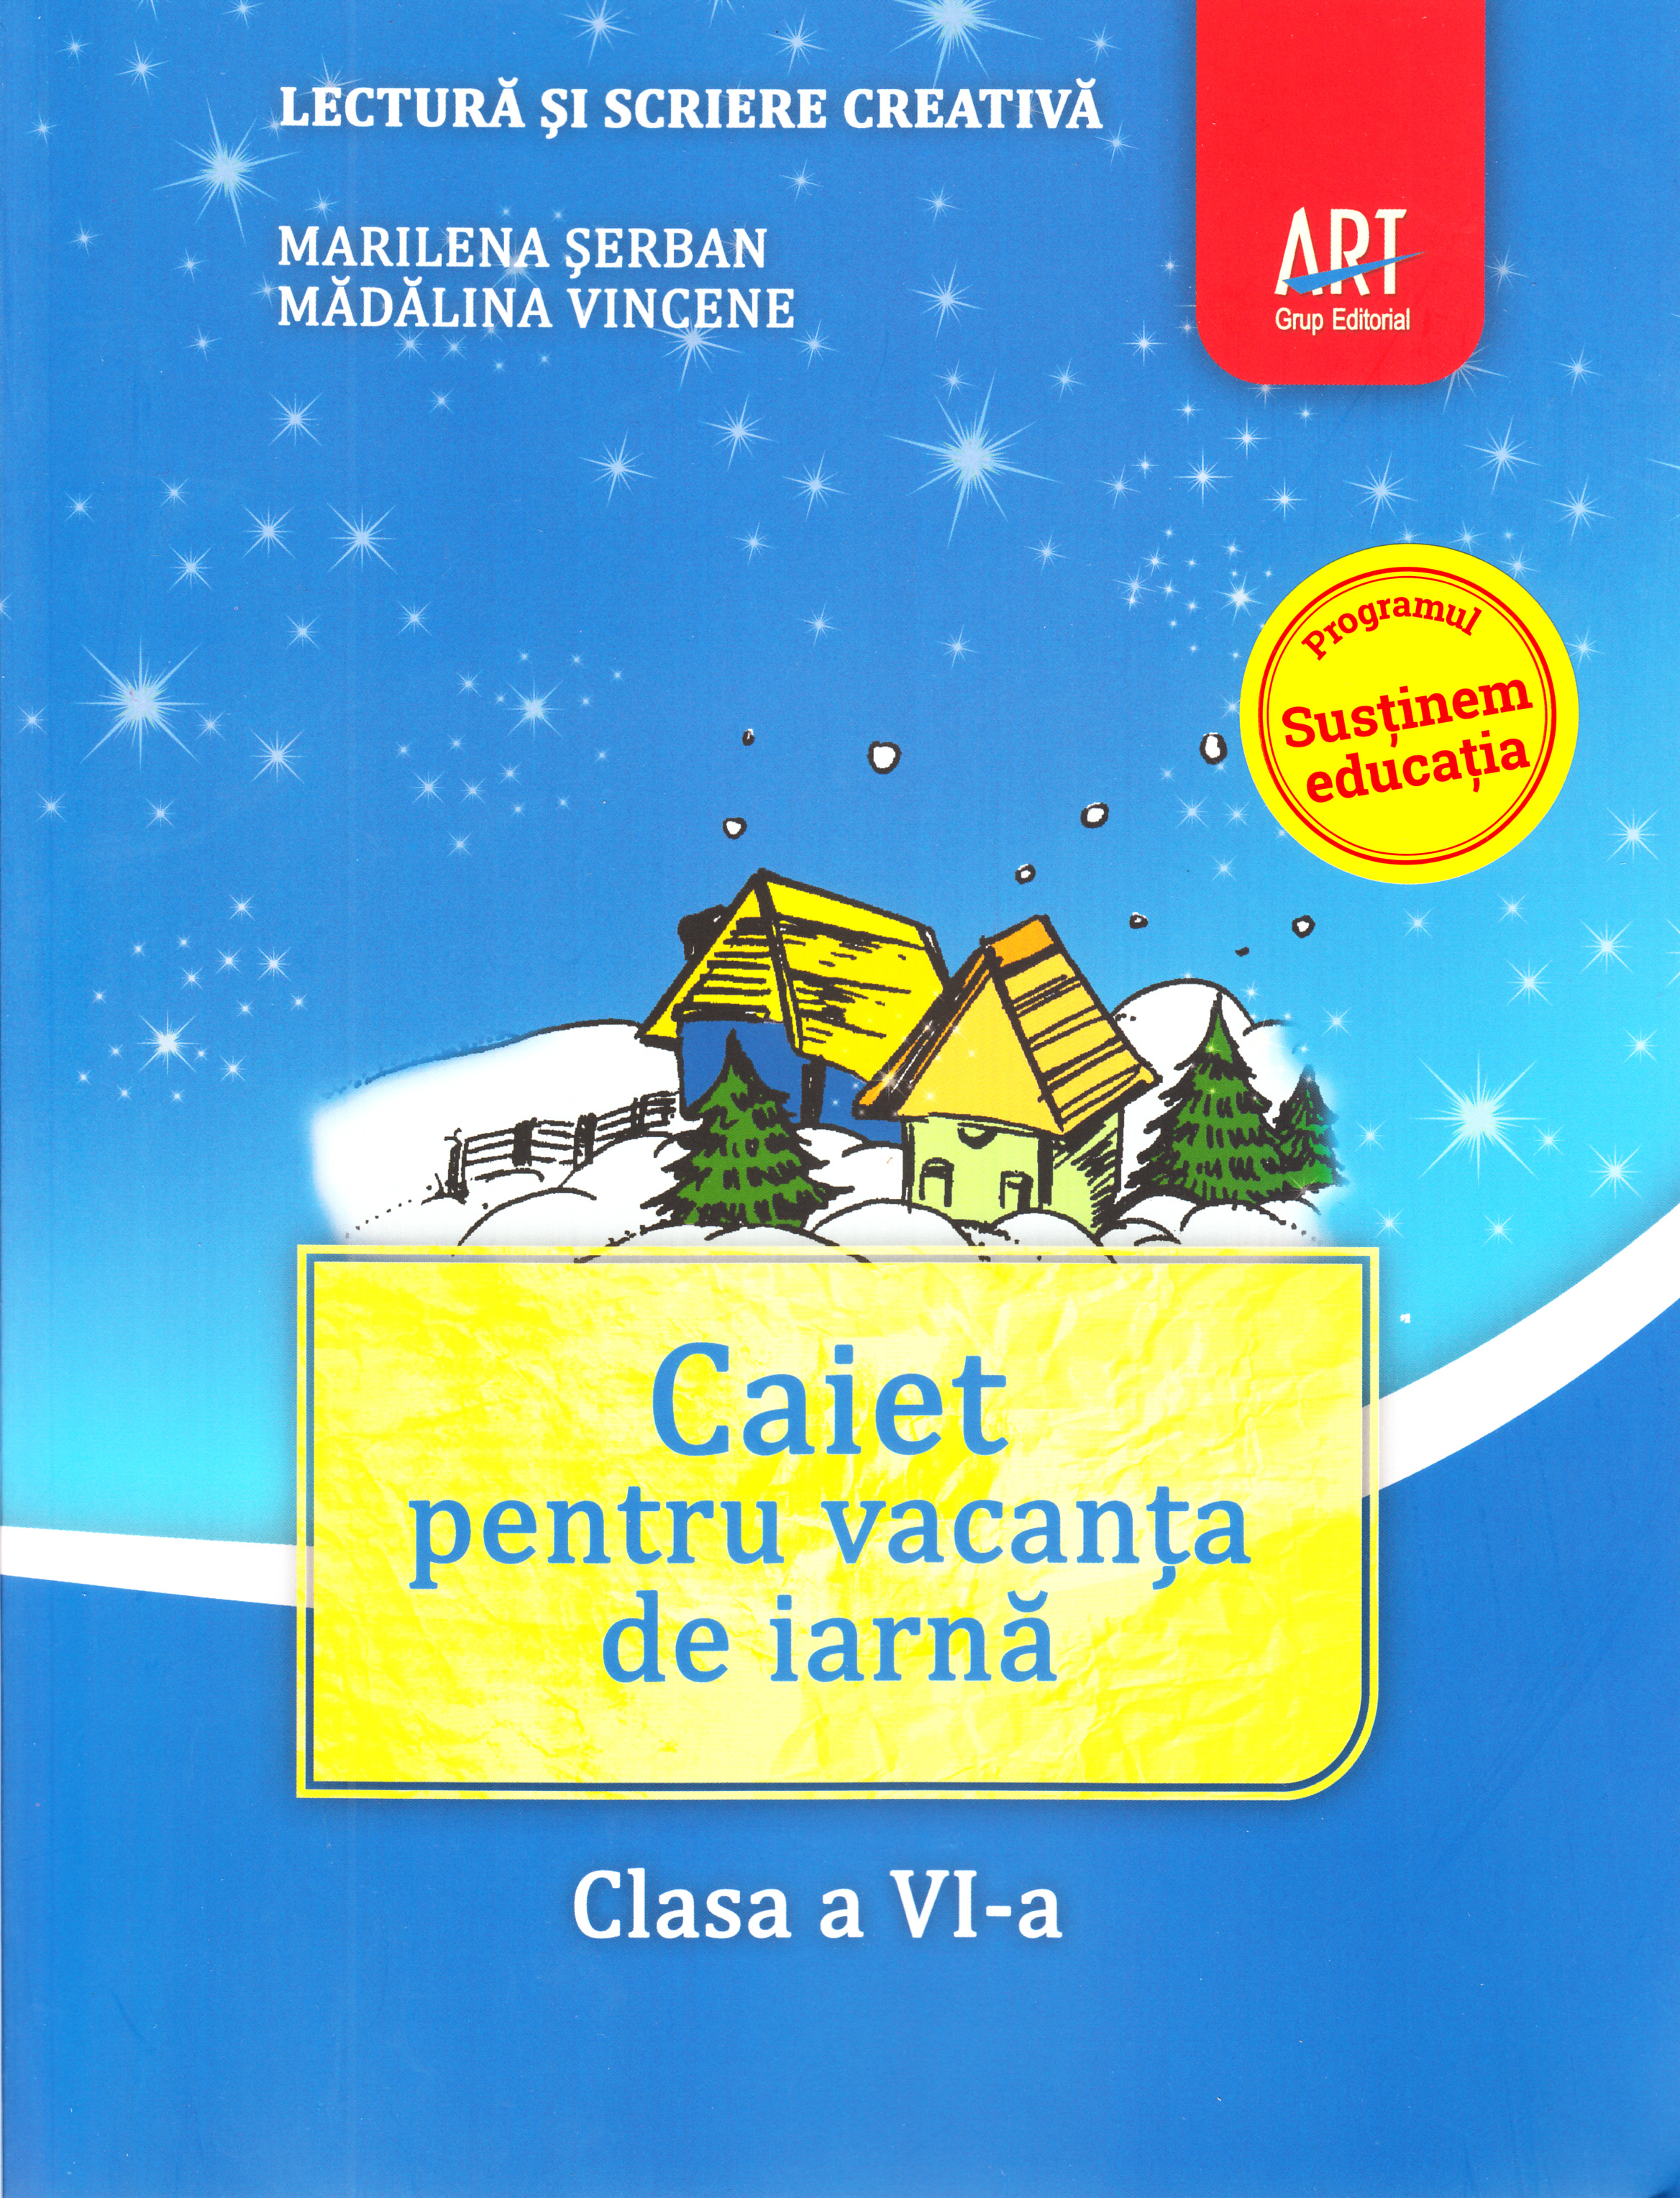 Caiet pentru vacanta de iarna - Clasa 6 - Lectura si scriere creativa - Marilena Serban, Madalina Vincene